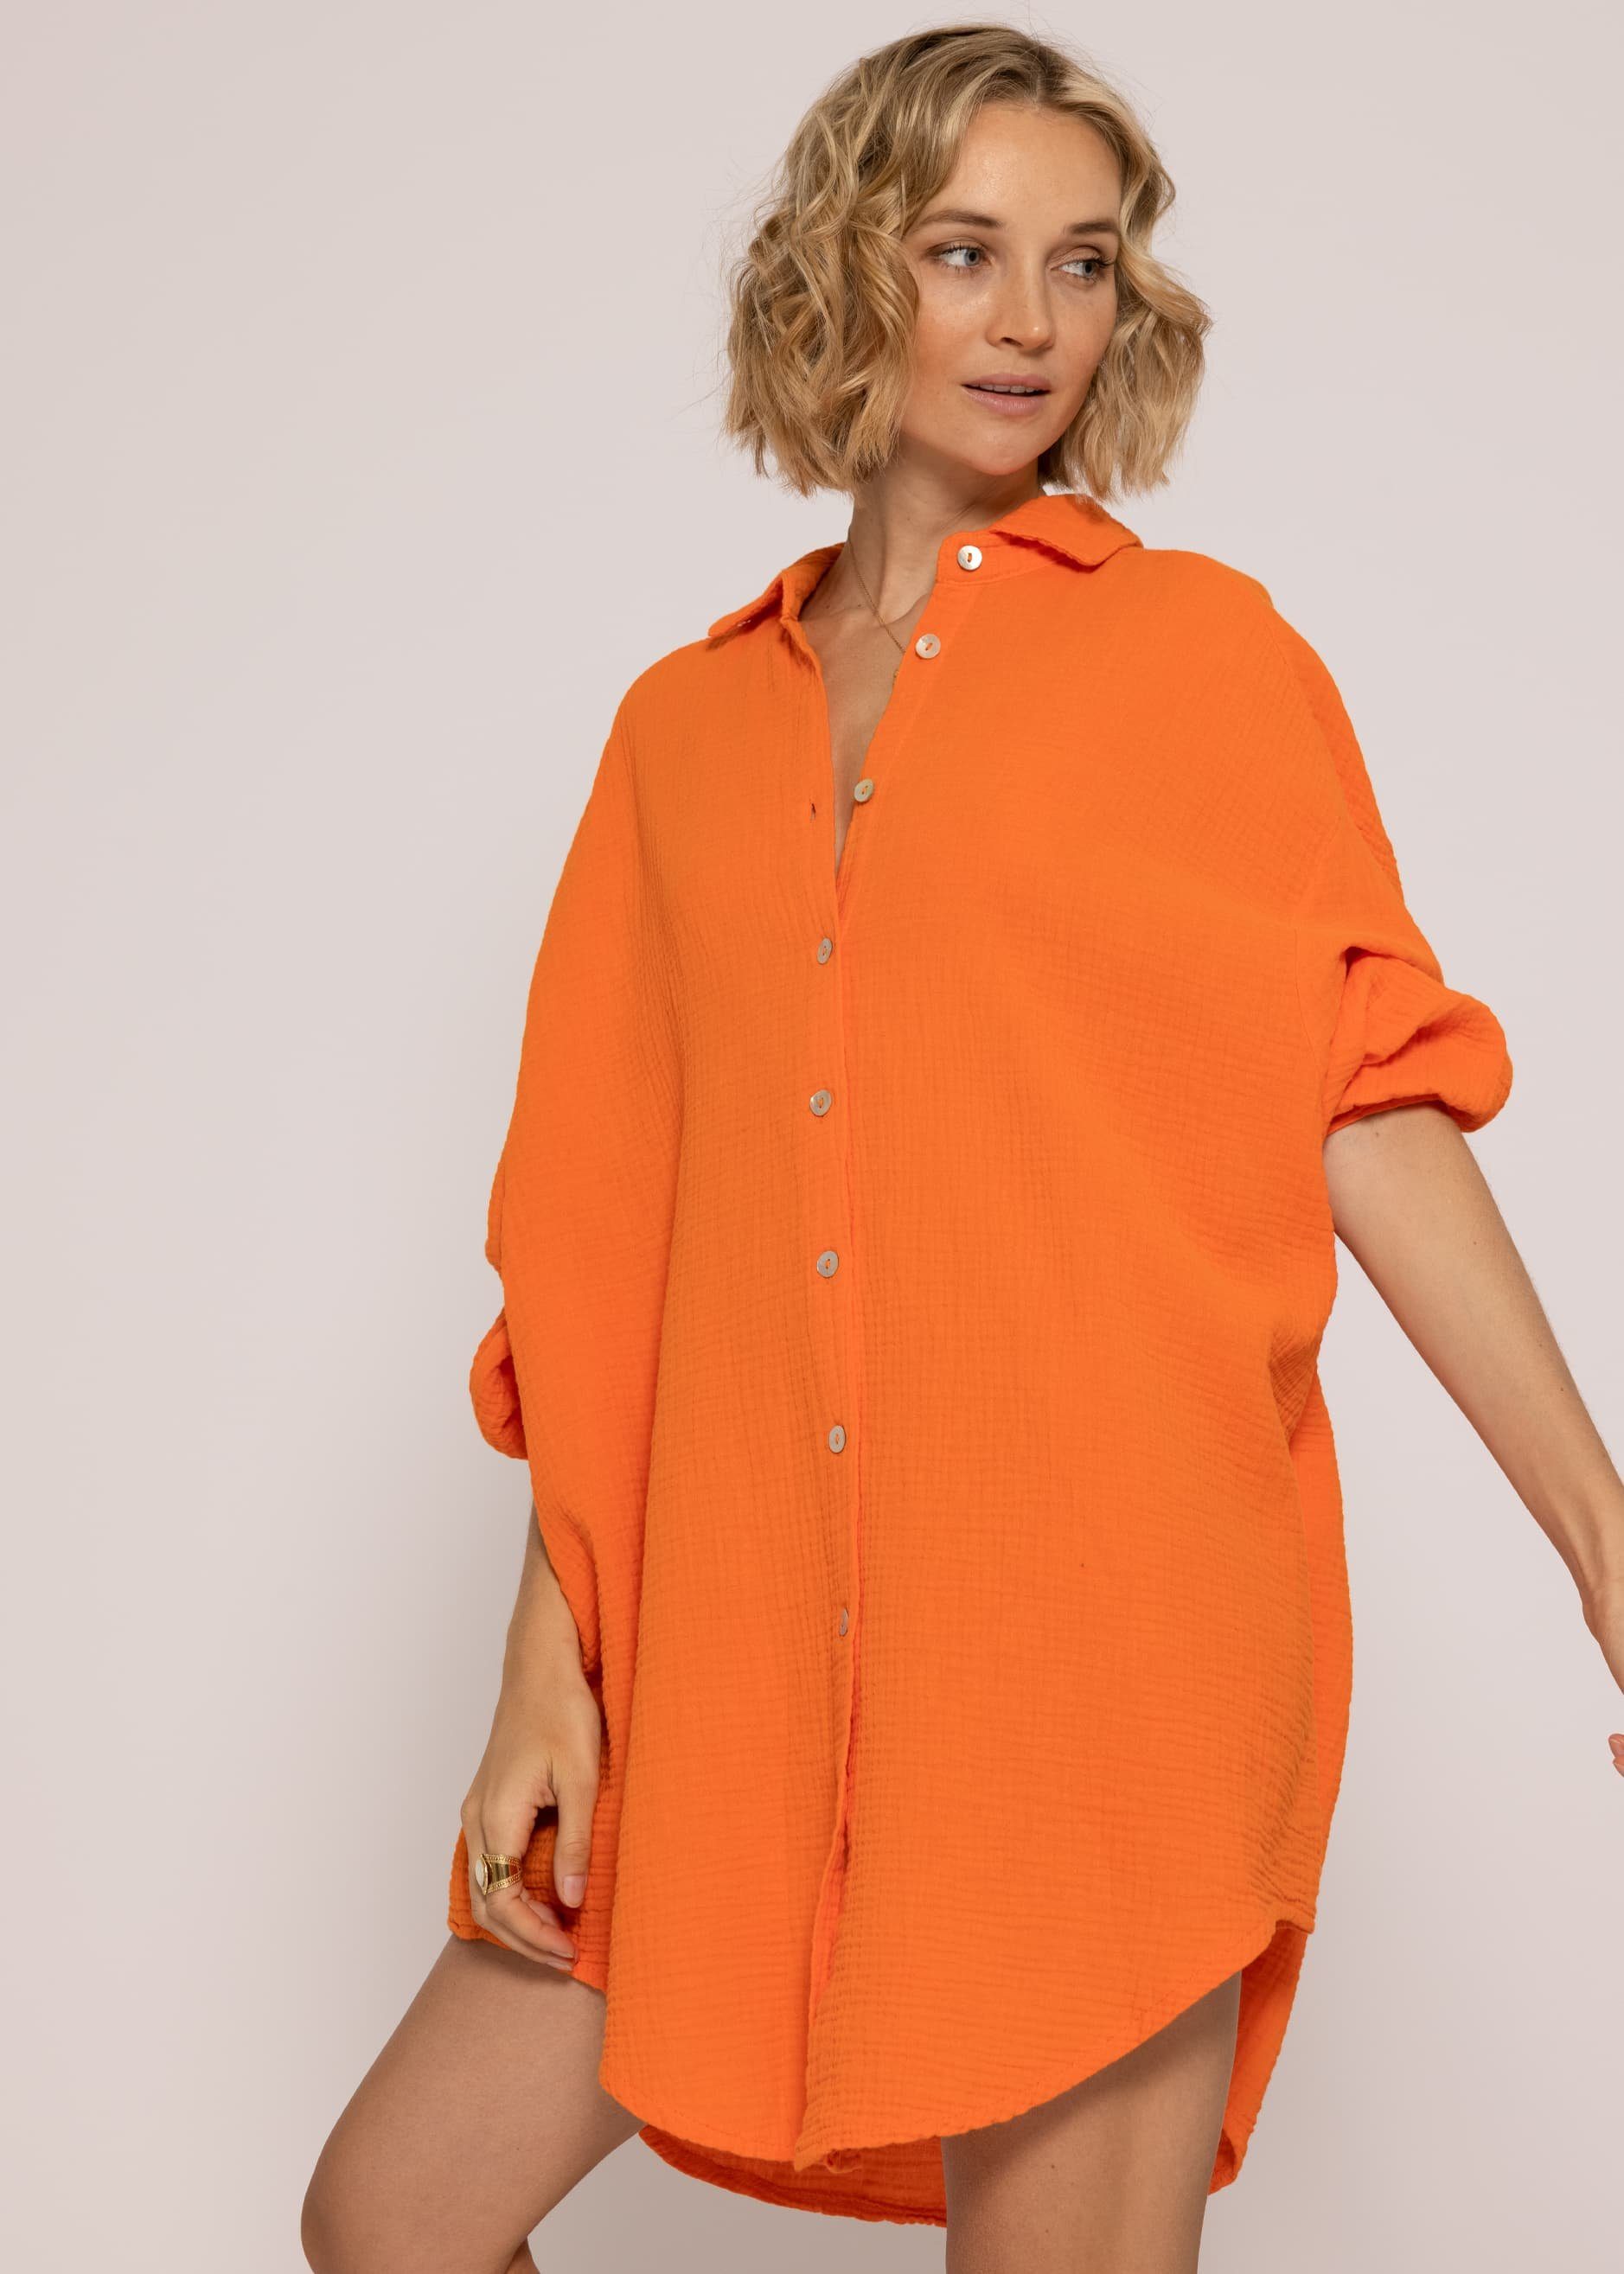 SASSYCLASSY Longbluse Oversize Musselin Bluse Damen Langarm Hemdbluse lang aus Baumwolle mit V-Ausschnitt, One Size (Gr. 36-48) Orange